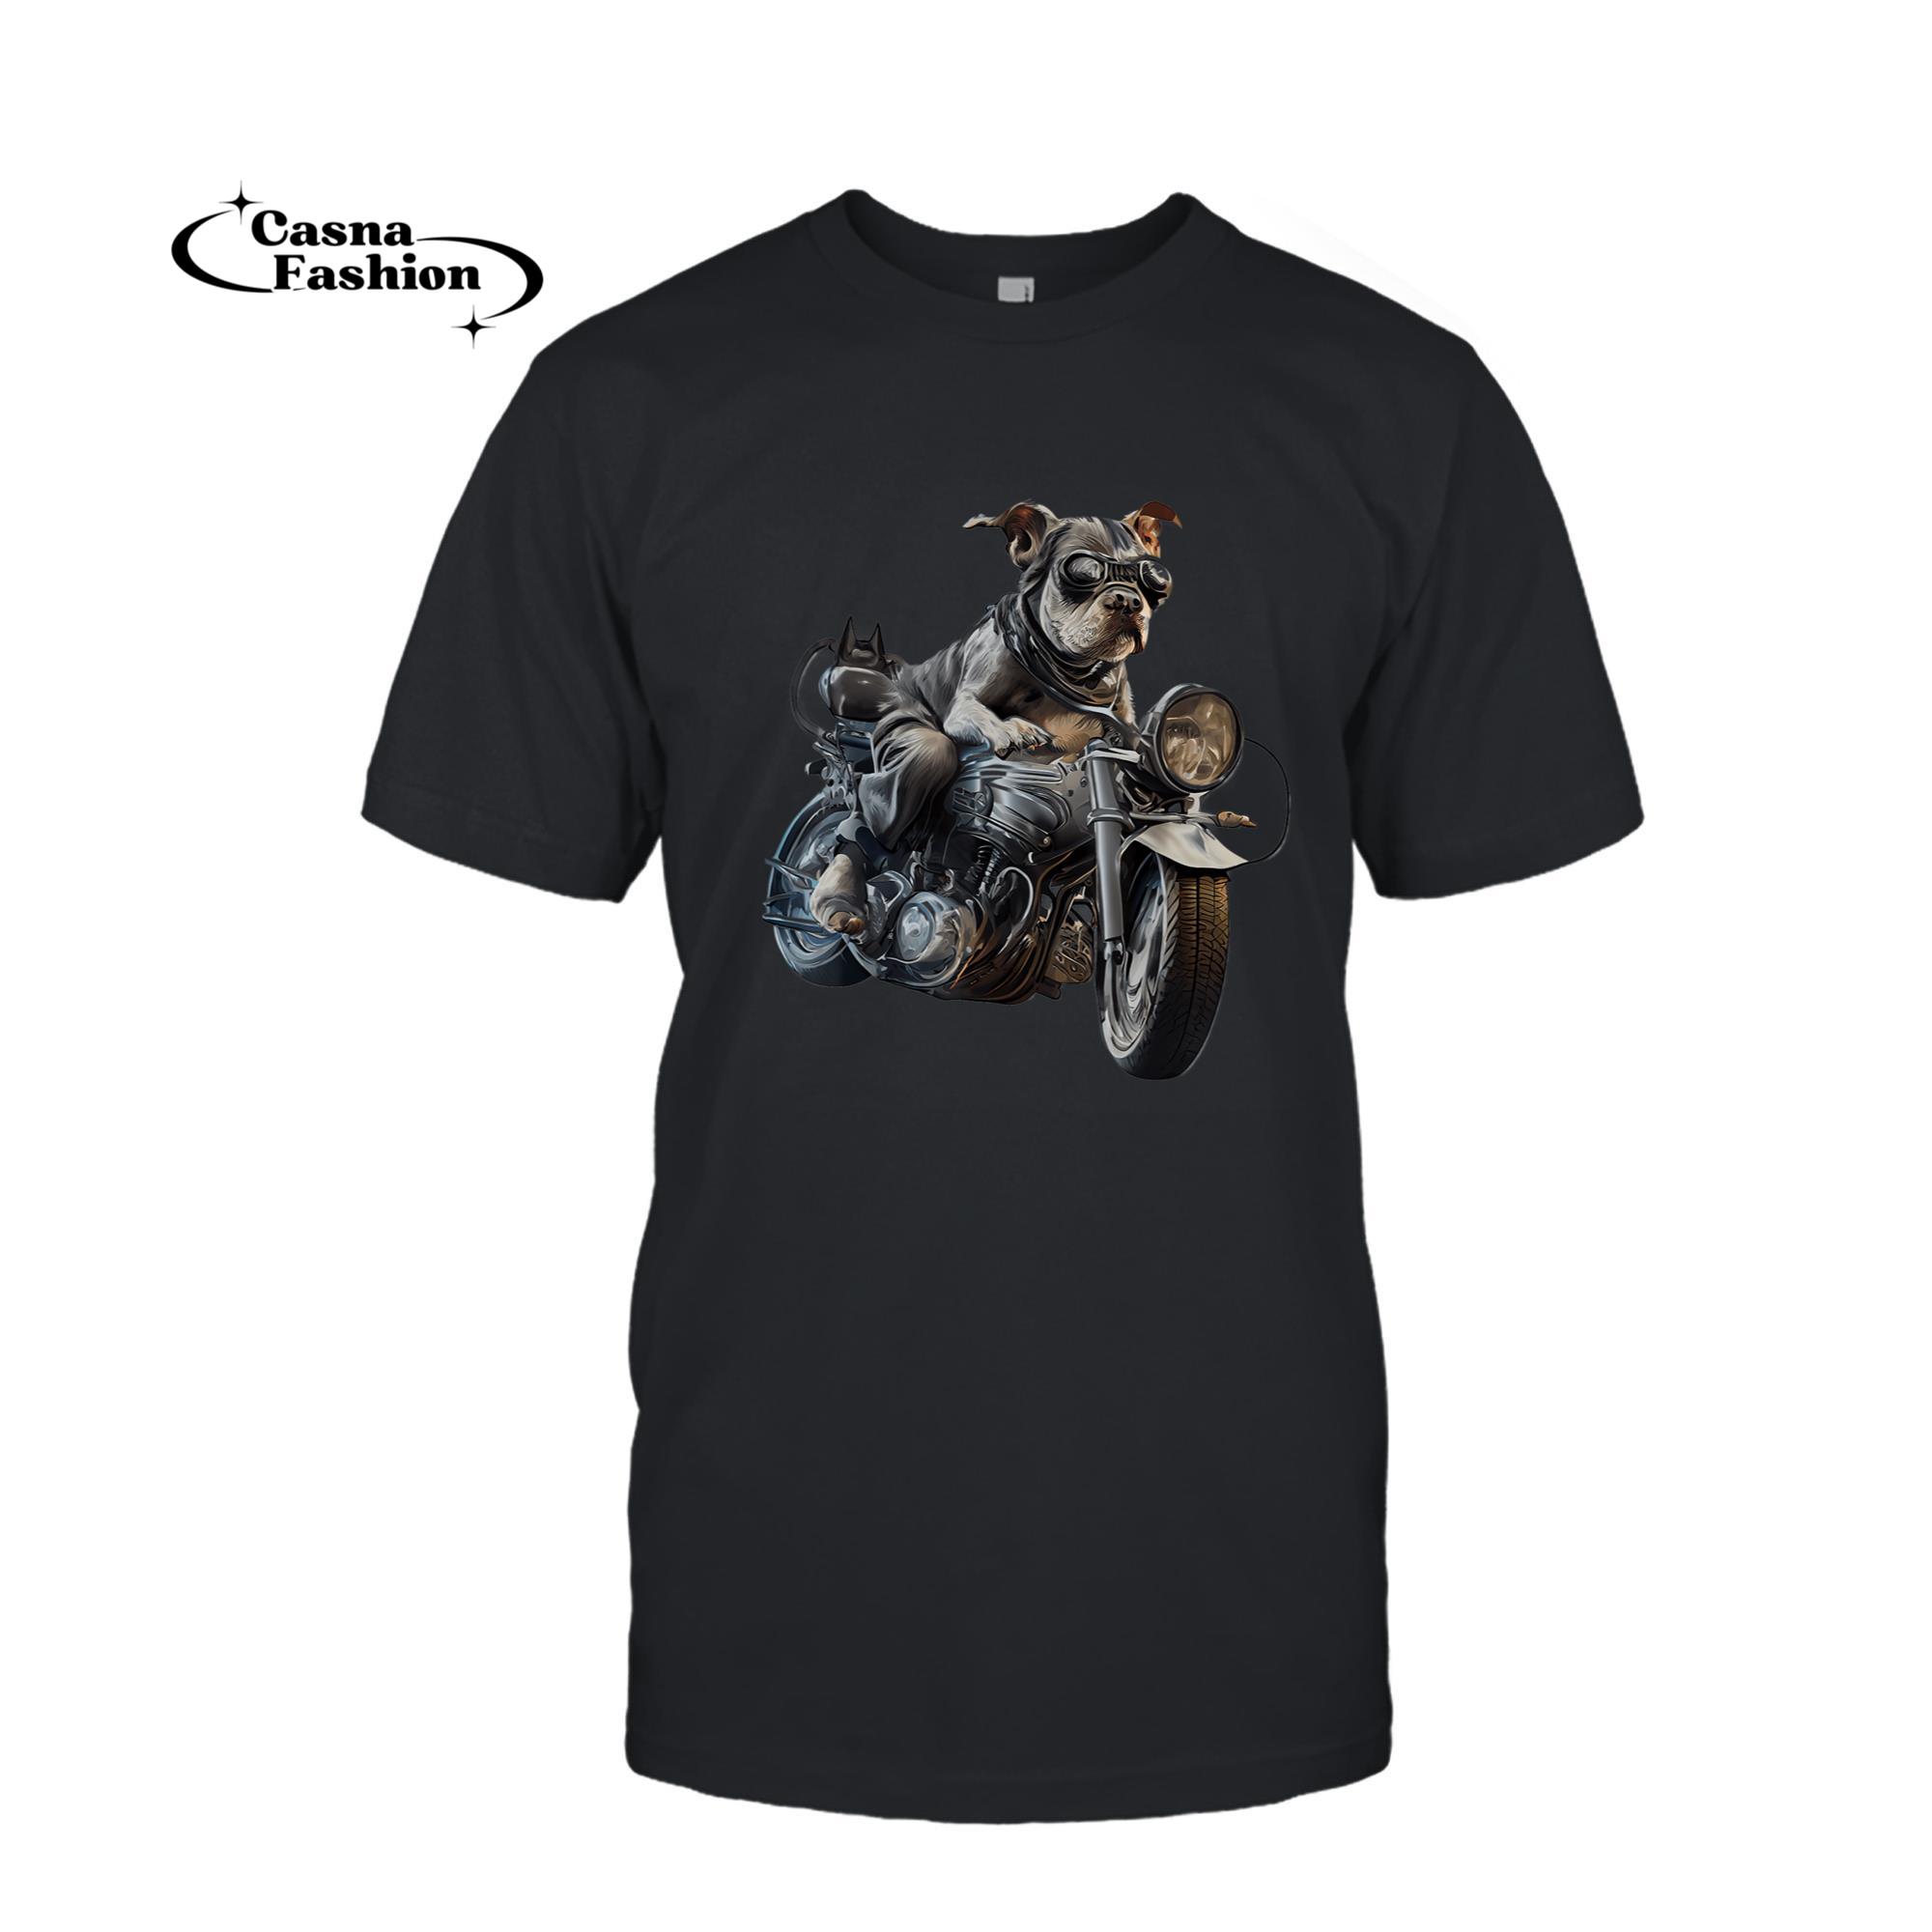 casnafashion_T-shirt_Dog Biker Motorcycle Funny Graphic Tees Men Women Boys Girls T-Shirt_T-shirt_Black